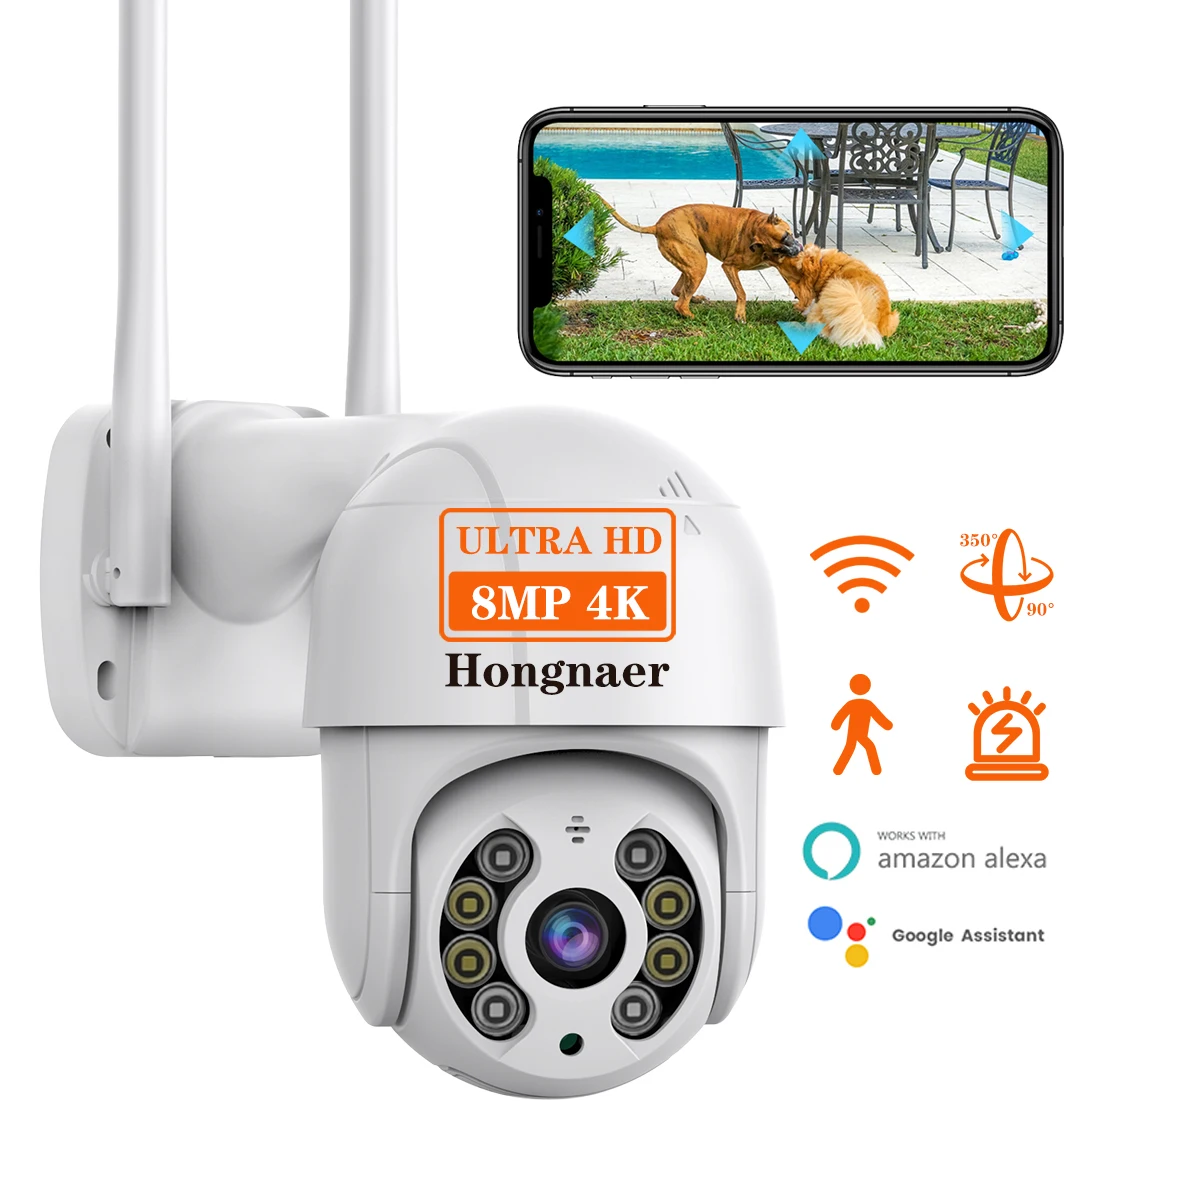 

Alexa Night Vision Auto Tracking 8MP 4K iCSee APP Outdoor Video Surveillance PTZ Dome Wireless IP Home Security CCTV WiFi Camera